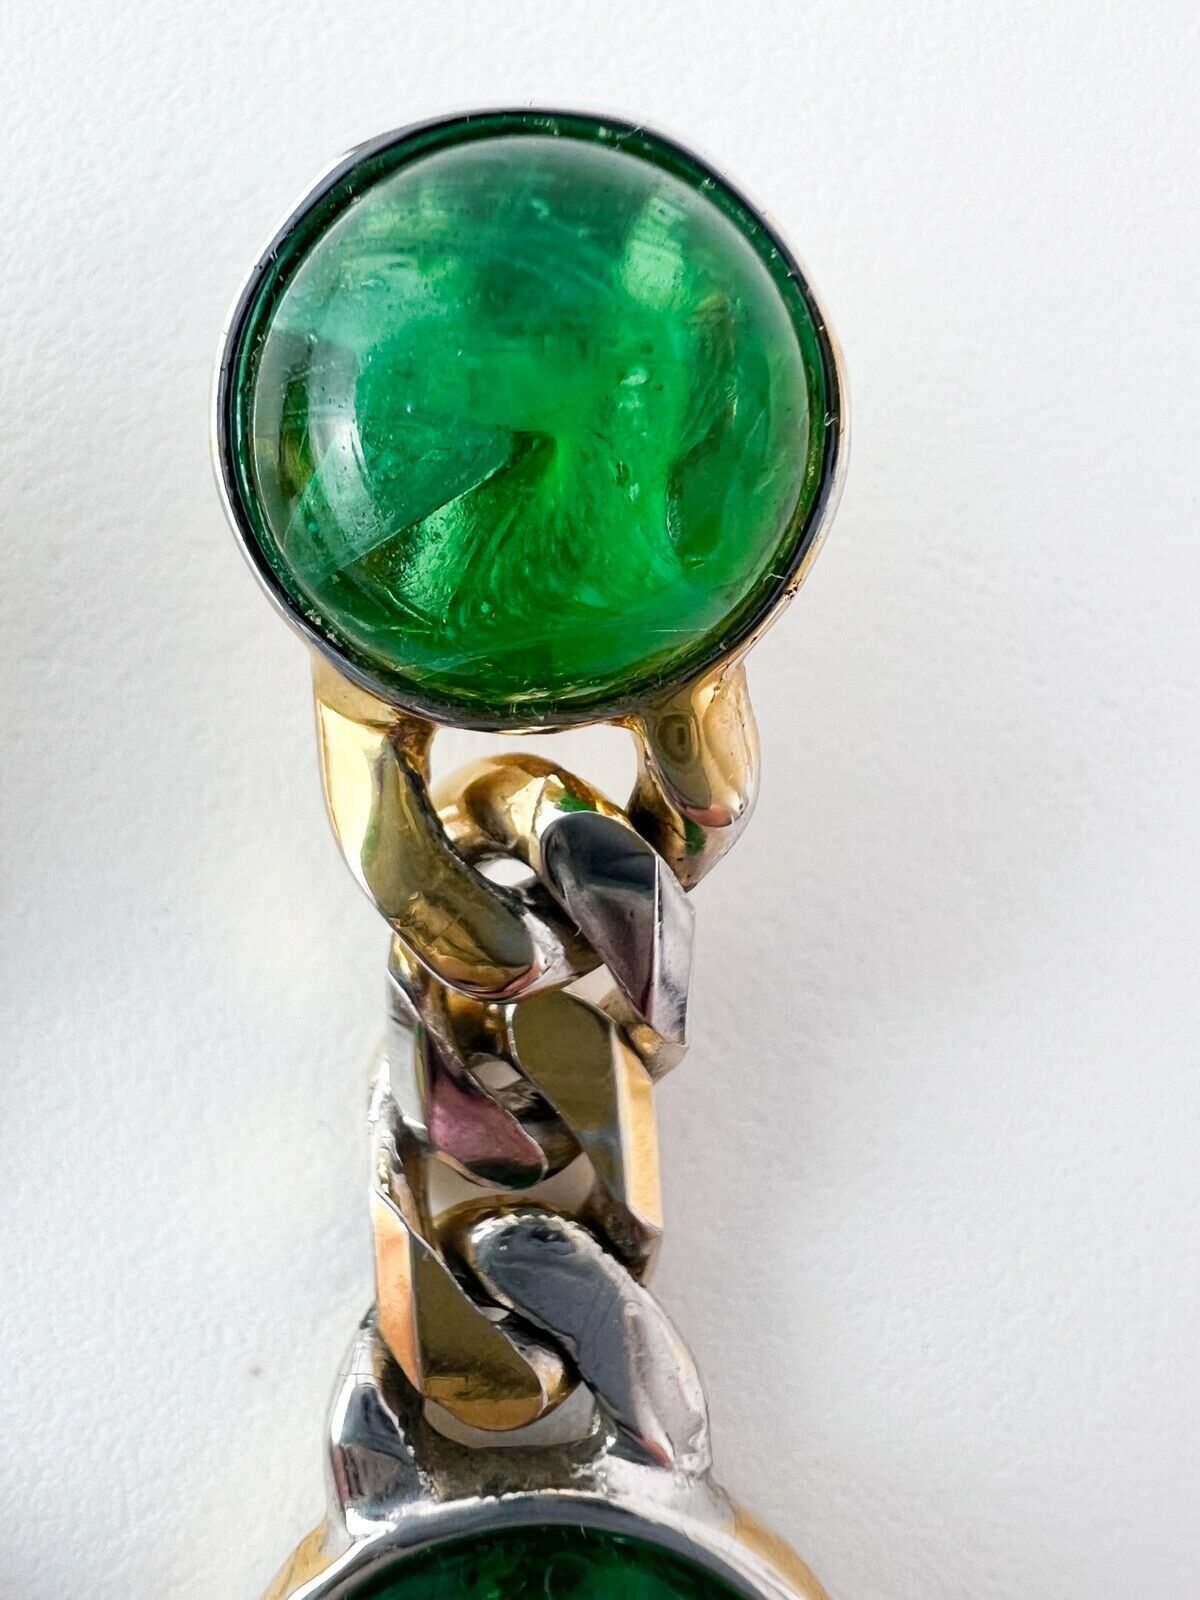 Vintage Dangling Earrings Chain Cabochon Emerald Green